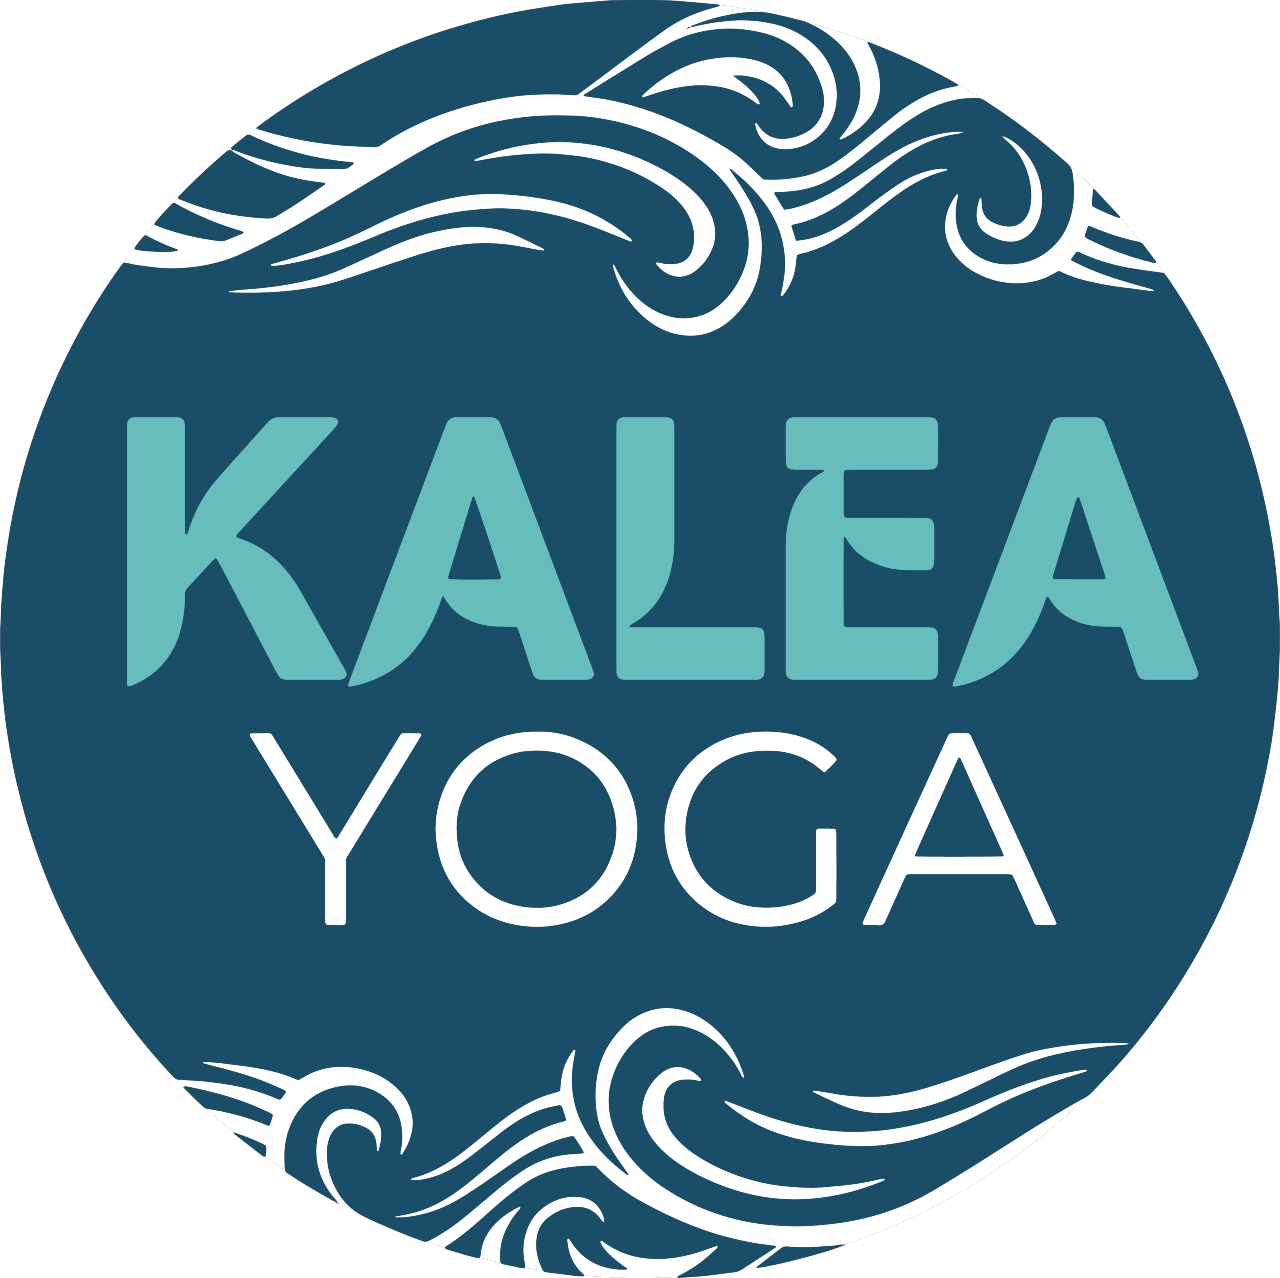 Kalea Yoga